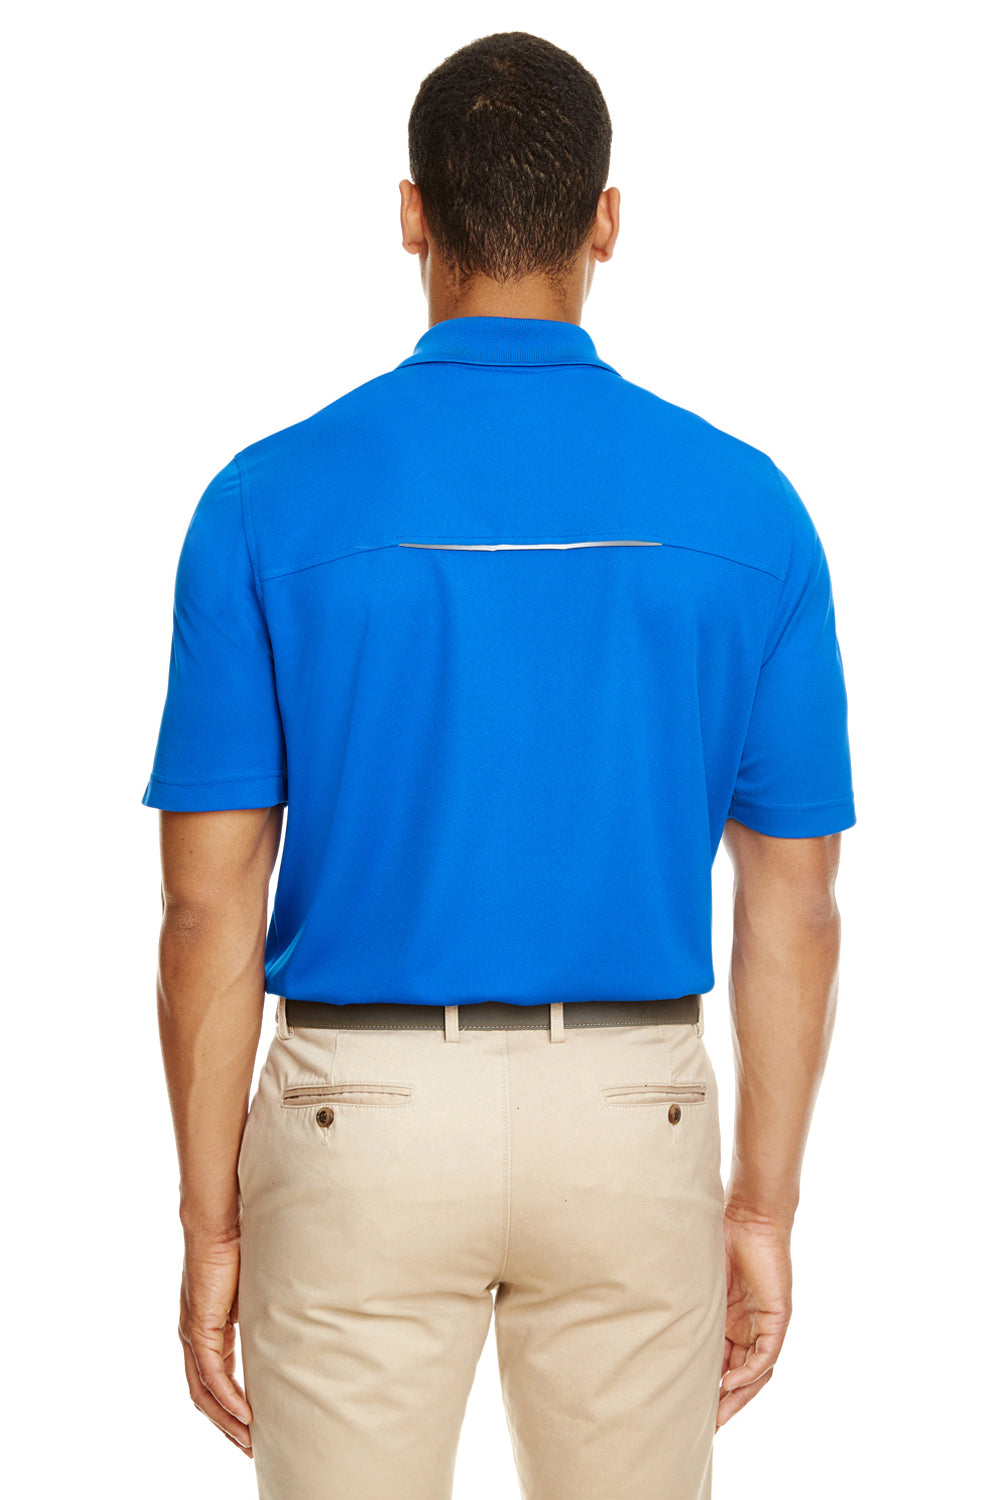 Core 365 88181R Mens Radiant Performance Moisture Wicking Short Sleeve Polo Shirt Royal Blue Back